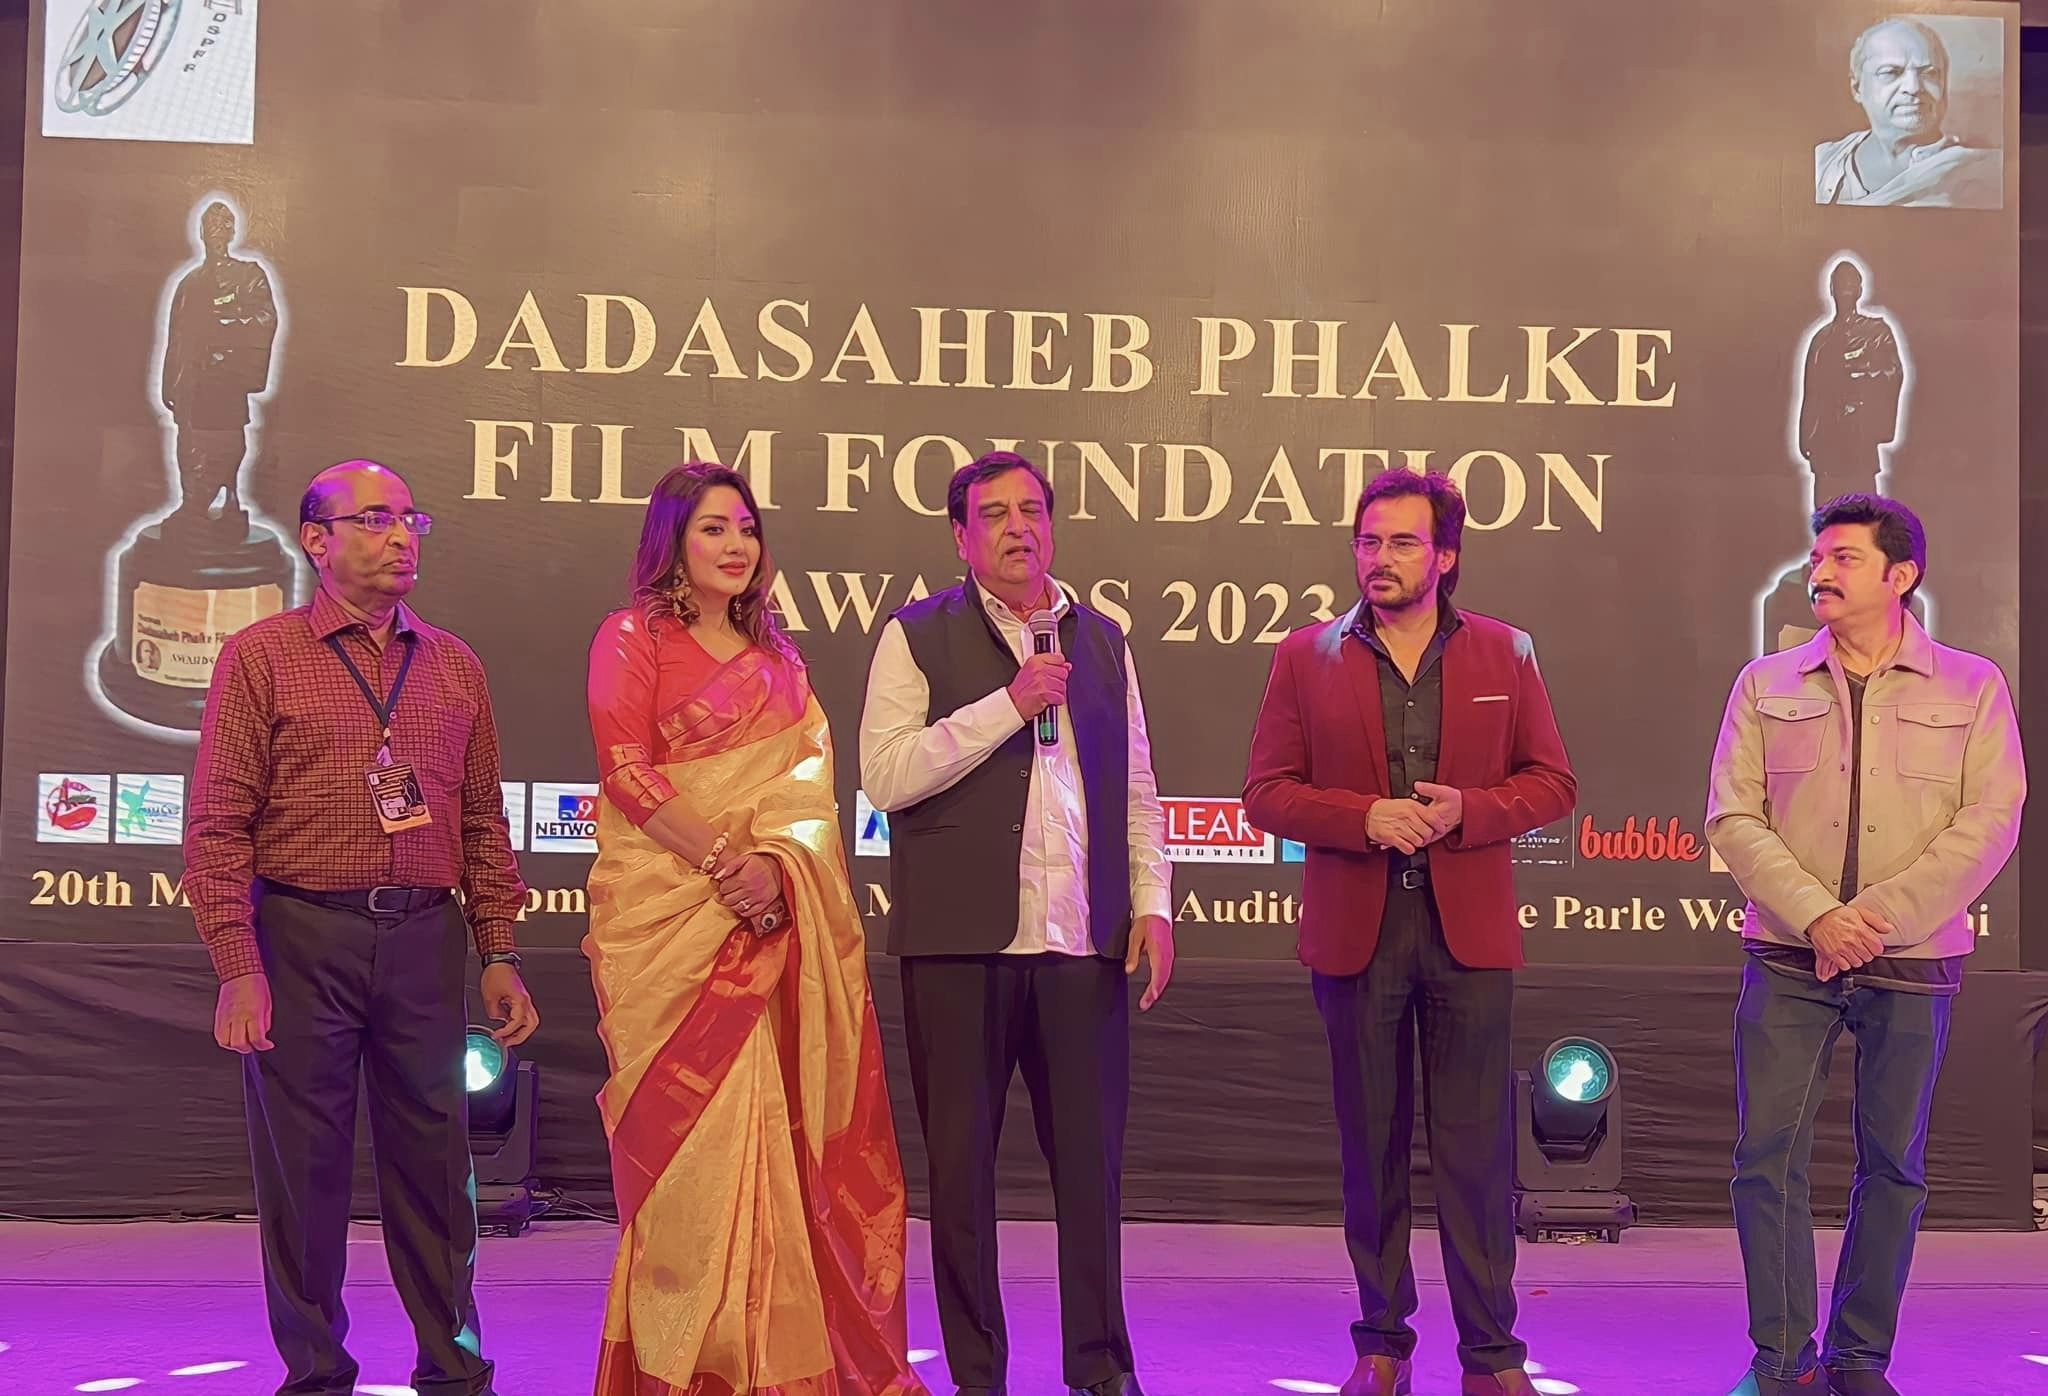 Artists Manandhar and Adhikari honored with Dadasaheb Phalke Film Award in India